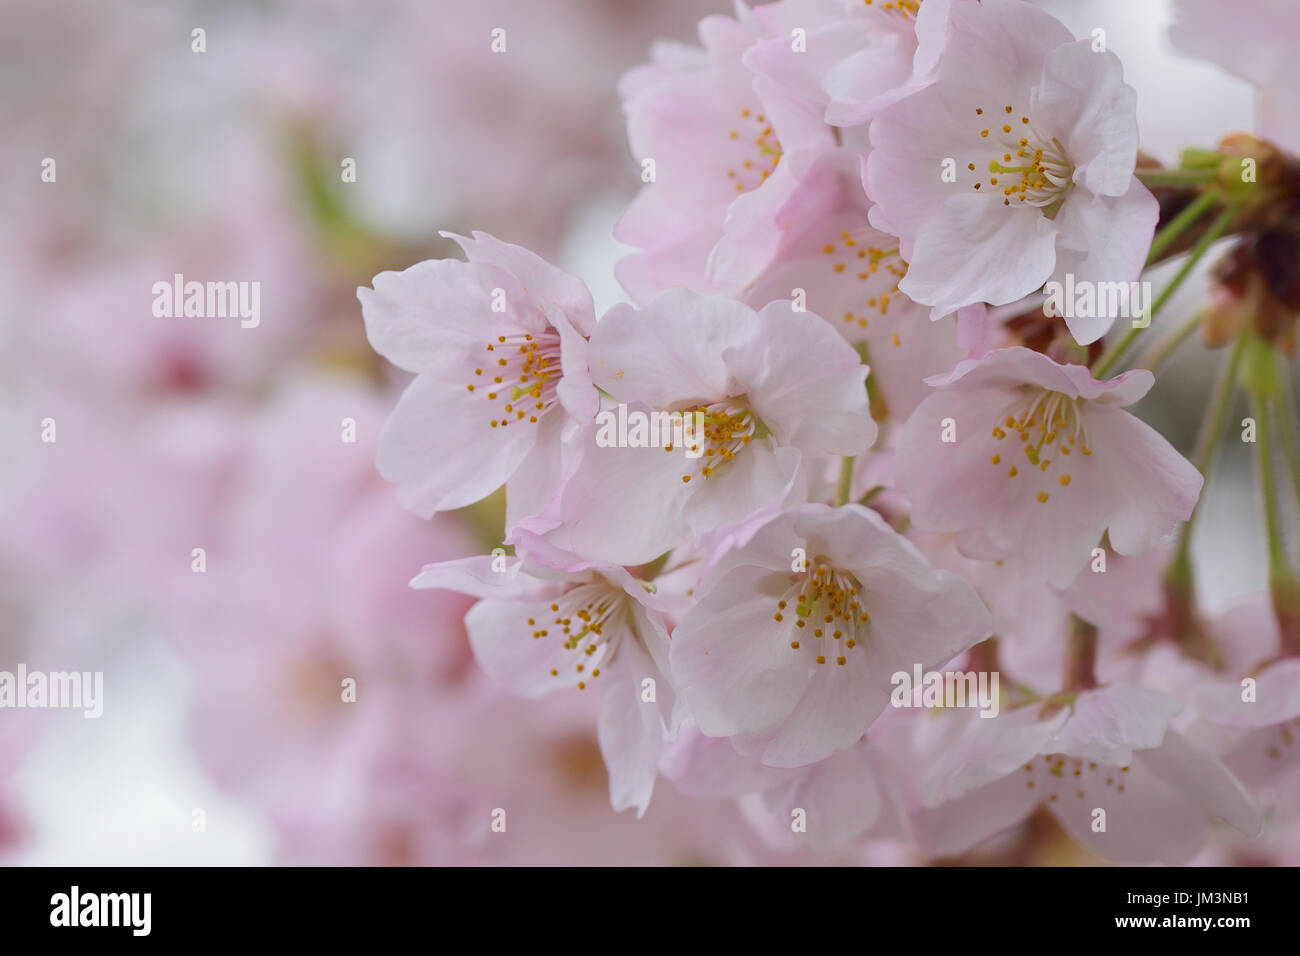 Macro details of white somei yoshino Cherry blossom branches in horizontal frame Stock Photo